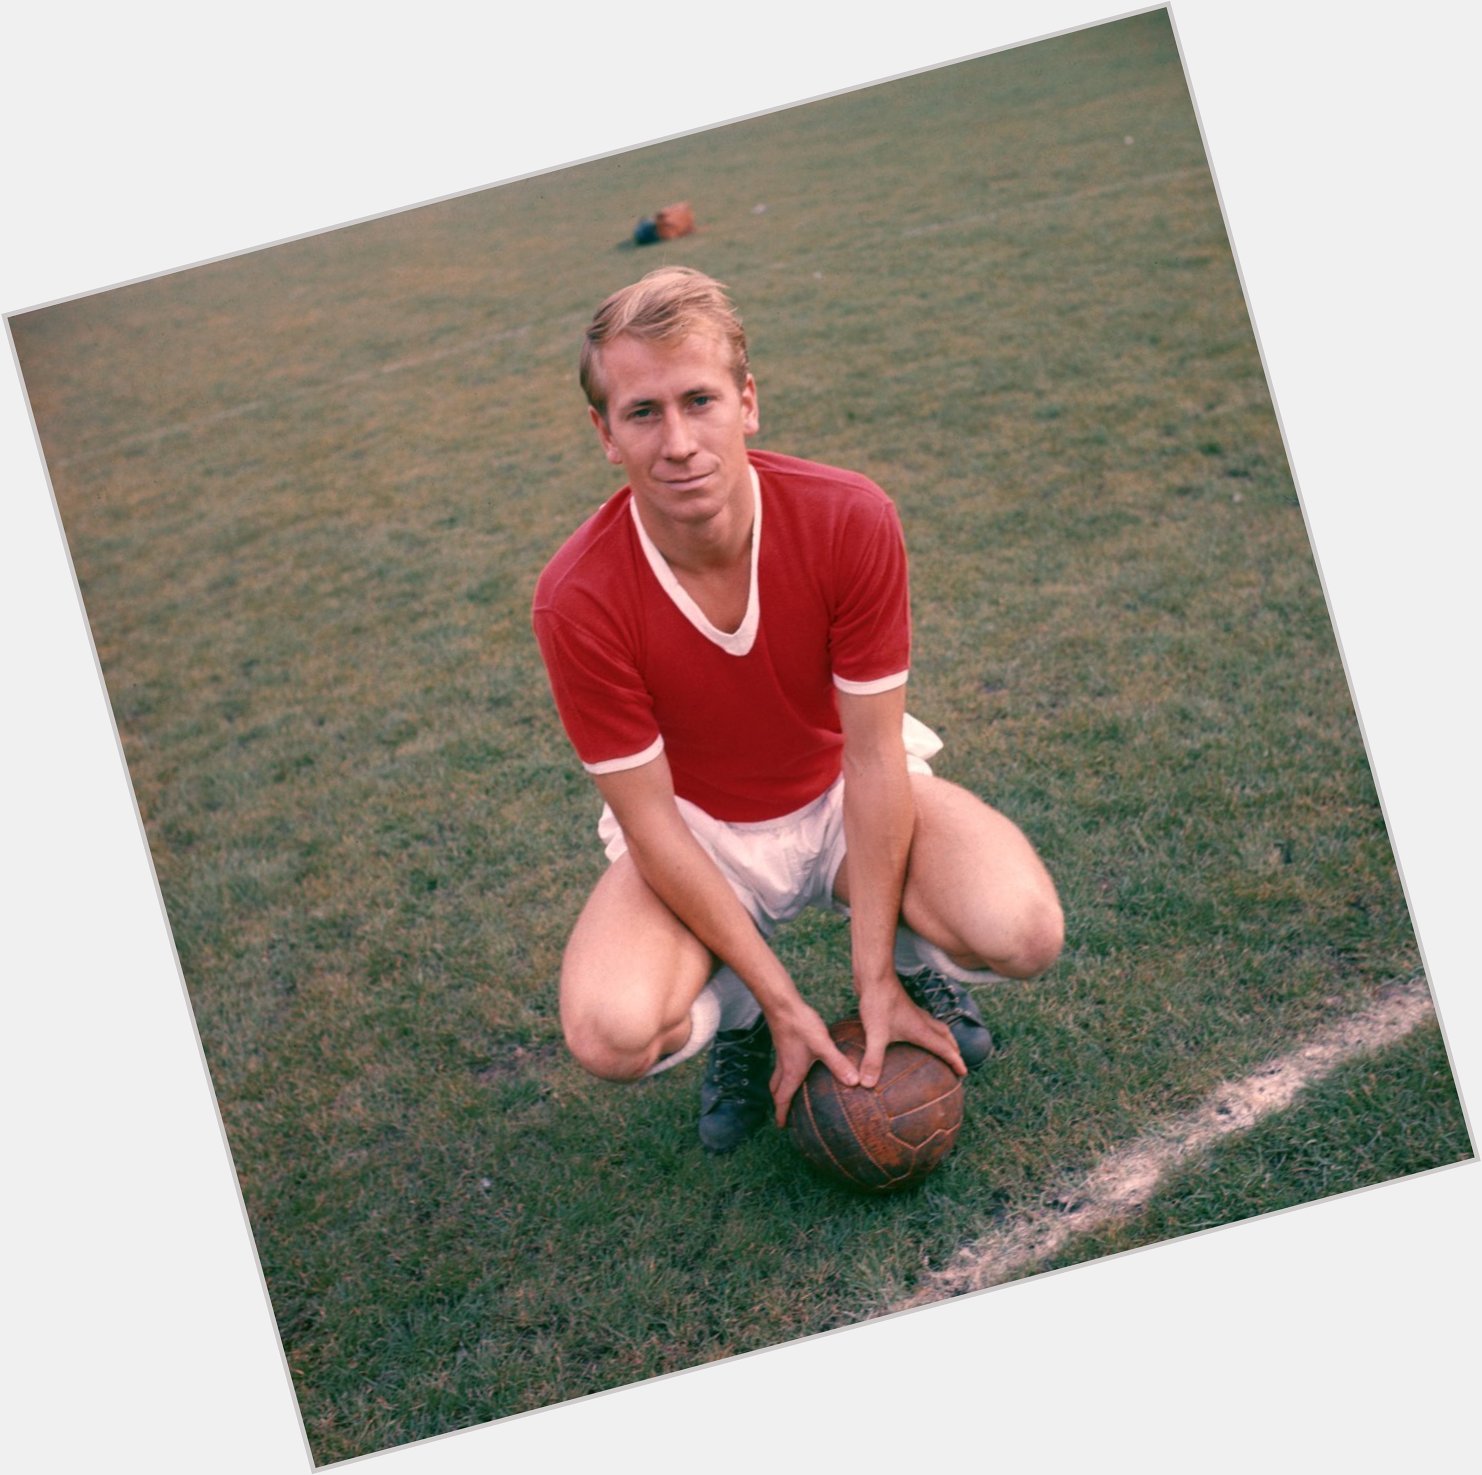 Happy 80th birthday, Sir Bobby Charlton. 

Games - 758  
Goals - 249
Trophies - 12 
 
Legend. 